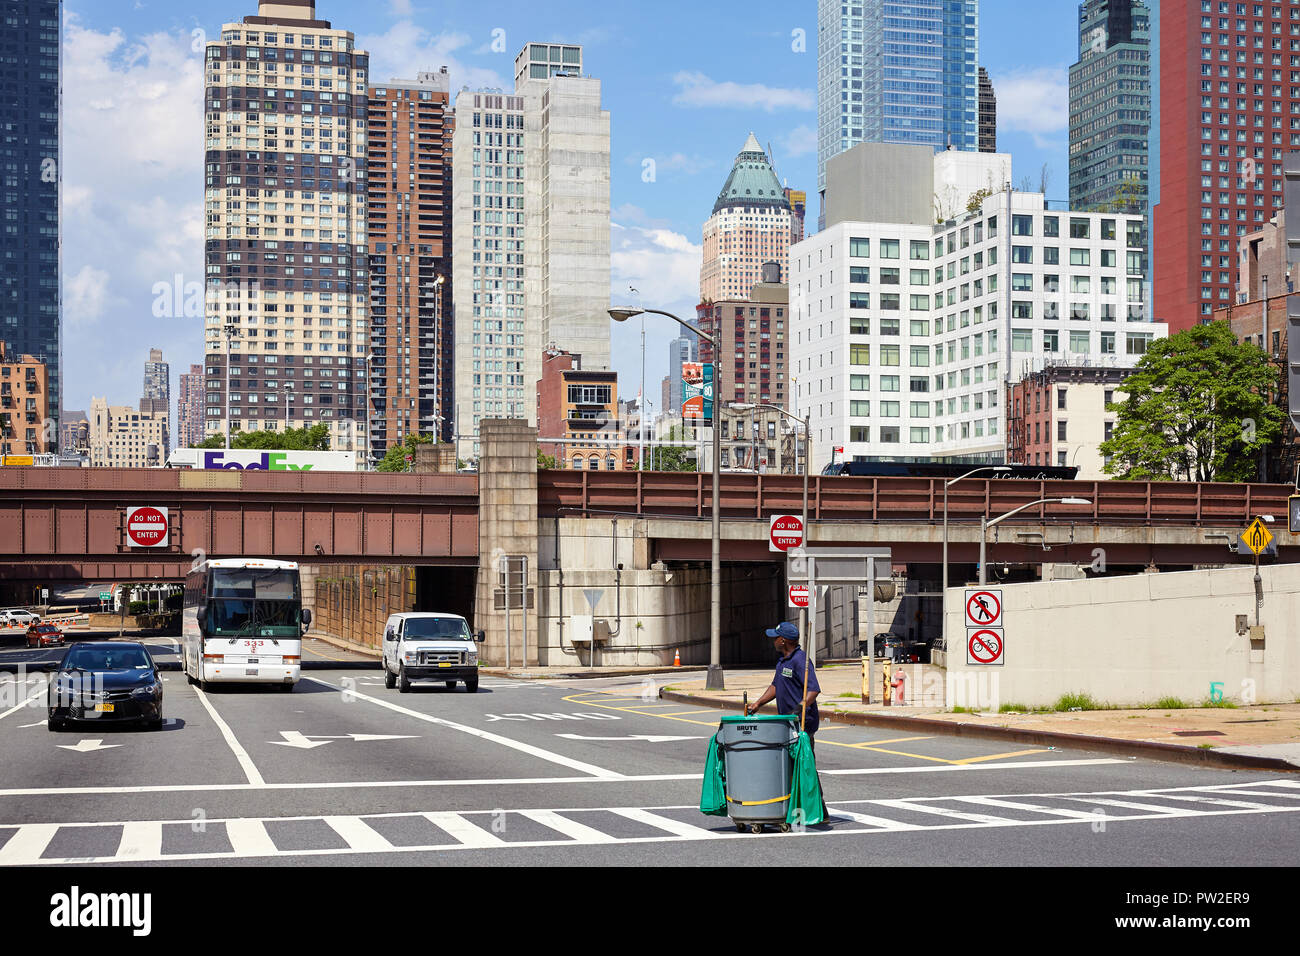 New York, USA - June 28, 2018: Maintenance worker walks across a zebra crossing. Stock Photo